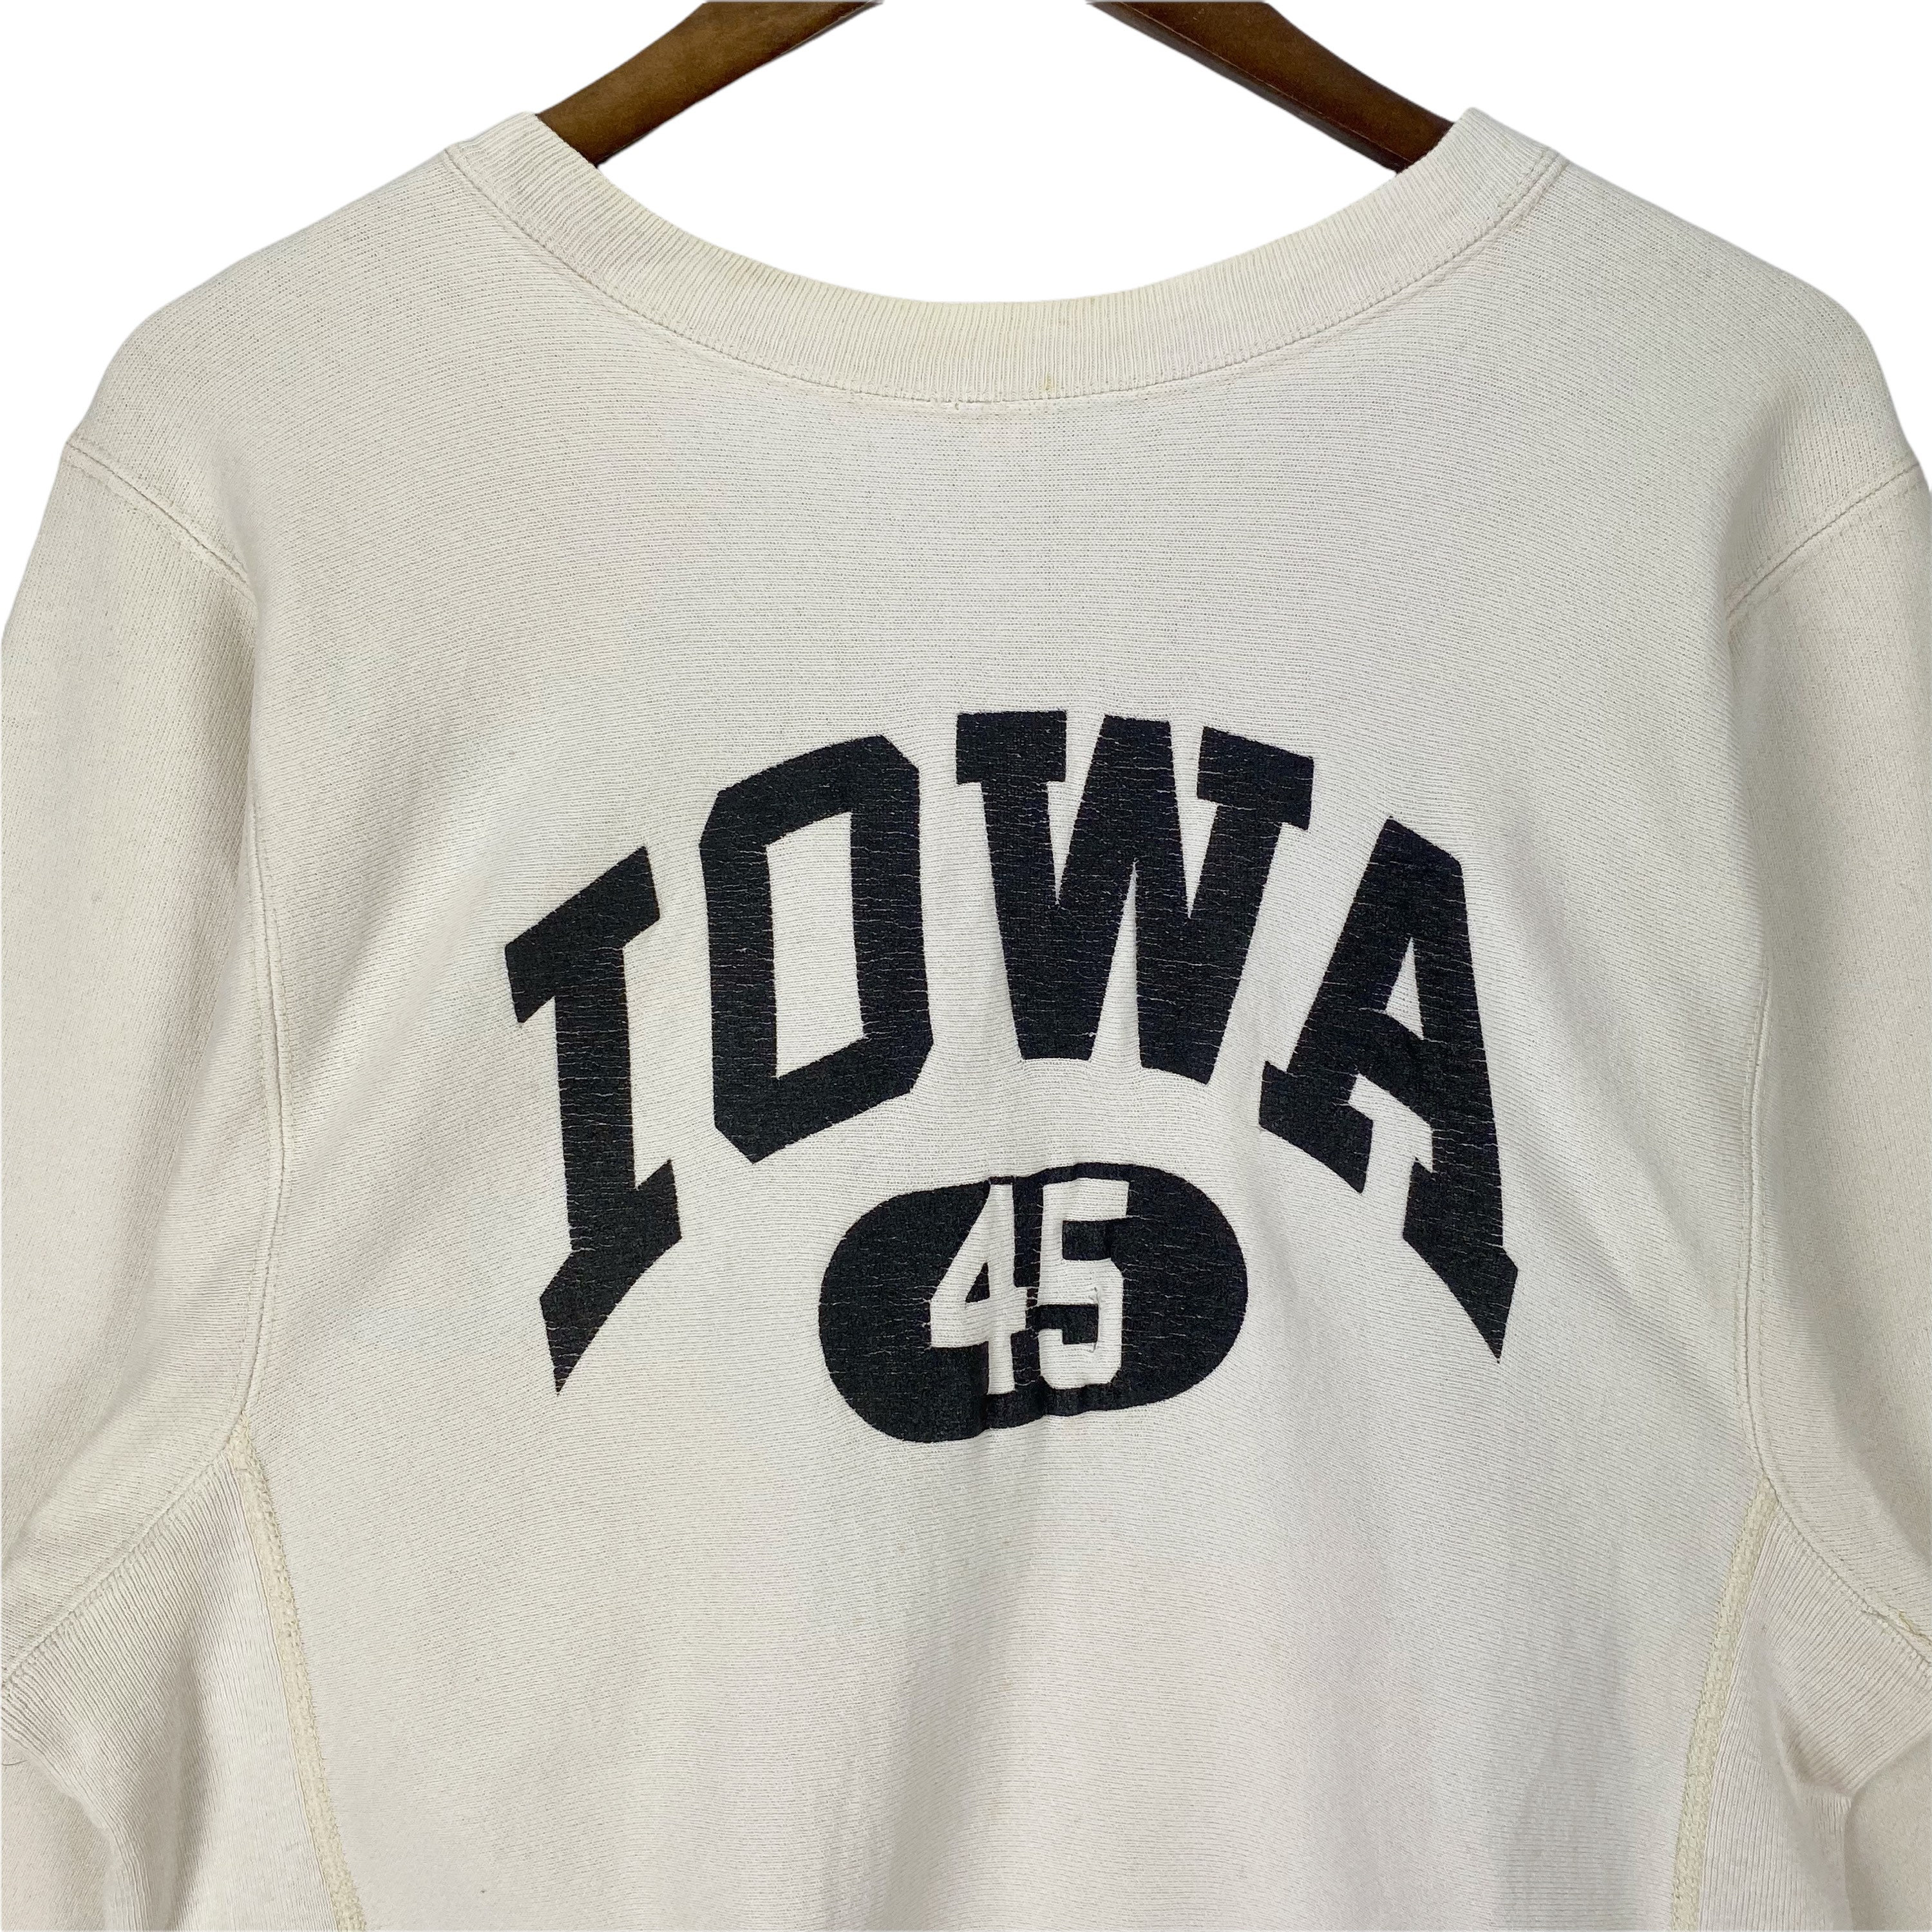 Vintage 90s Champion Reverse Weave Iowa 45 Sweatshirt 